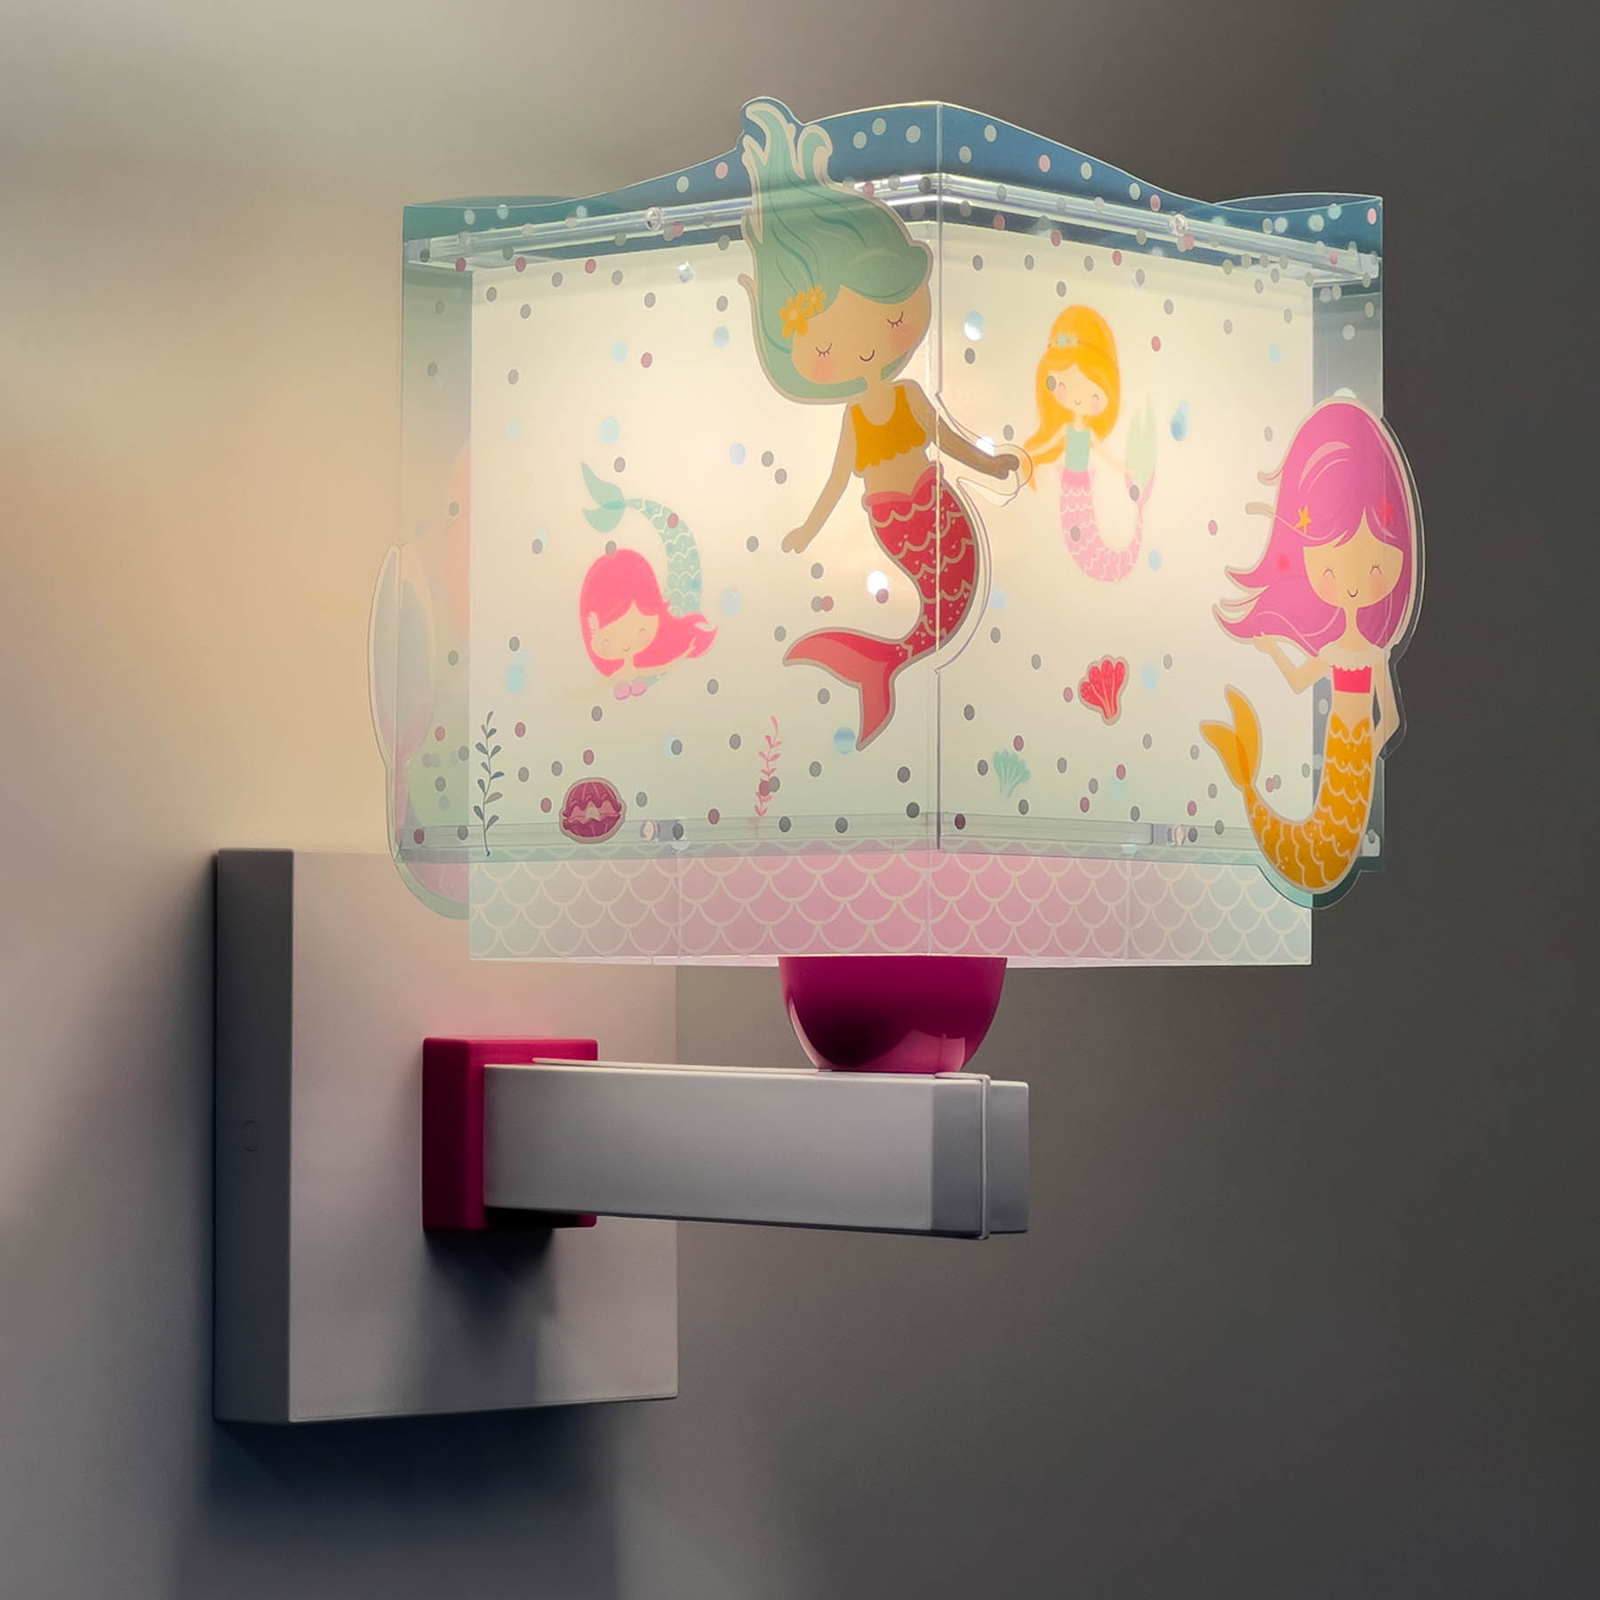 Dalber Mermaids wall lamp with a mermaid motif